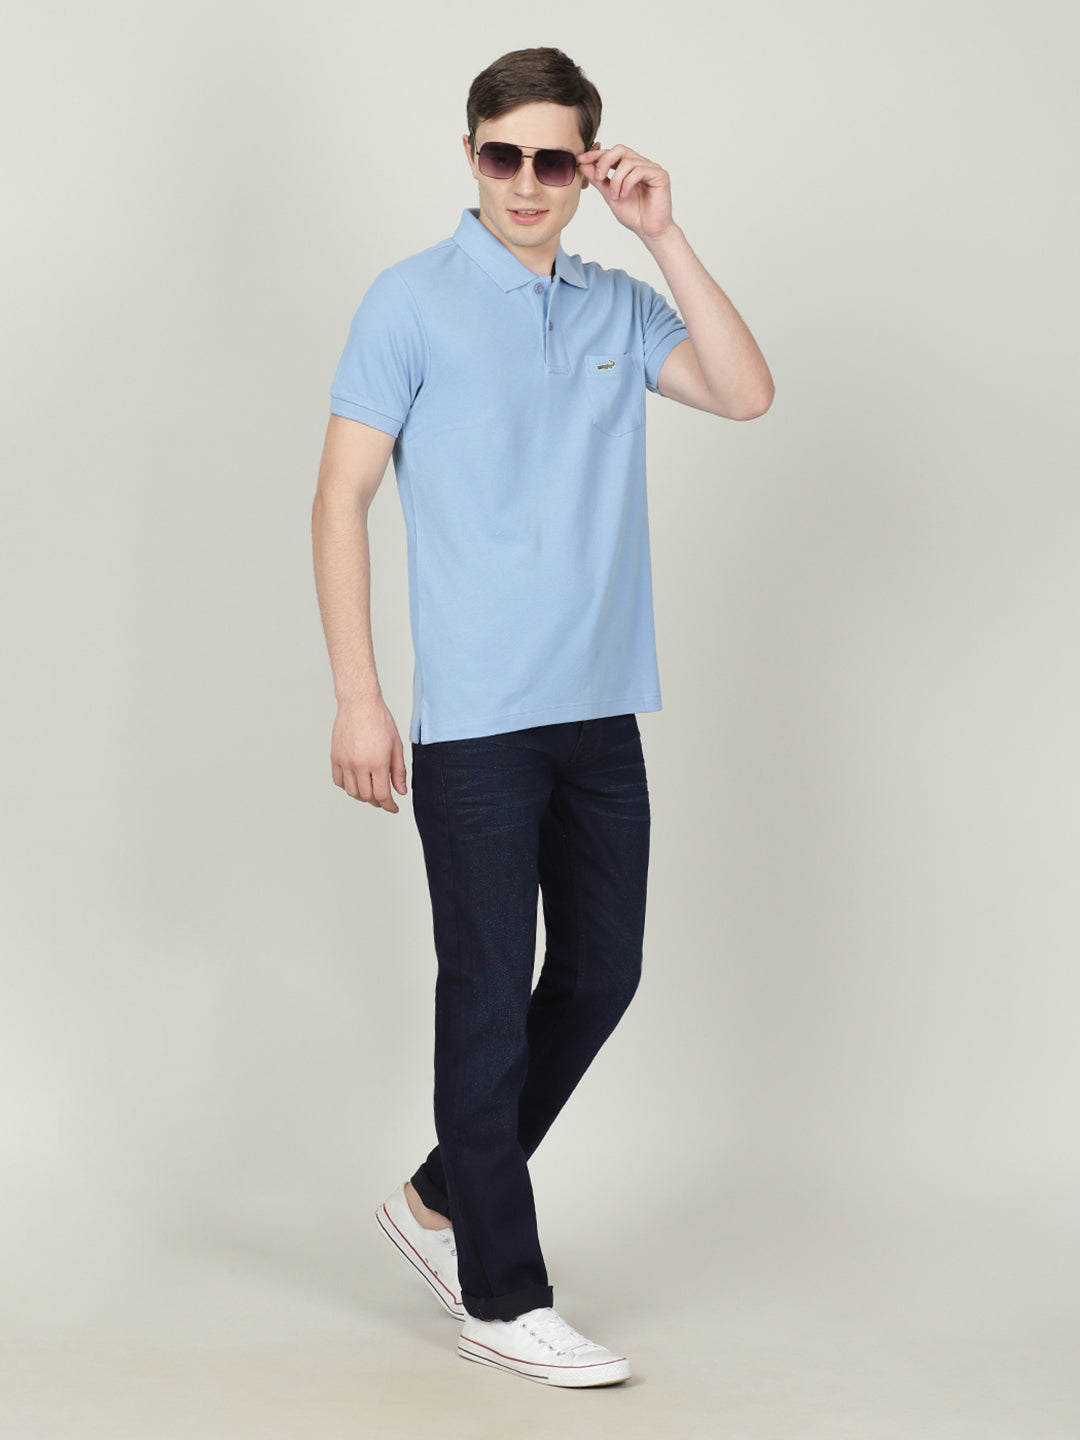 Shop Crocodile Blue Solid Polo T-Shirt Online